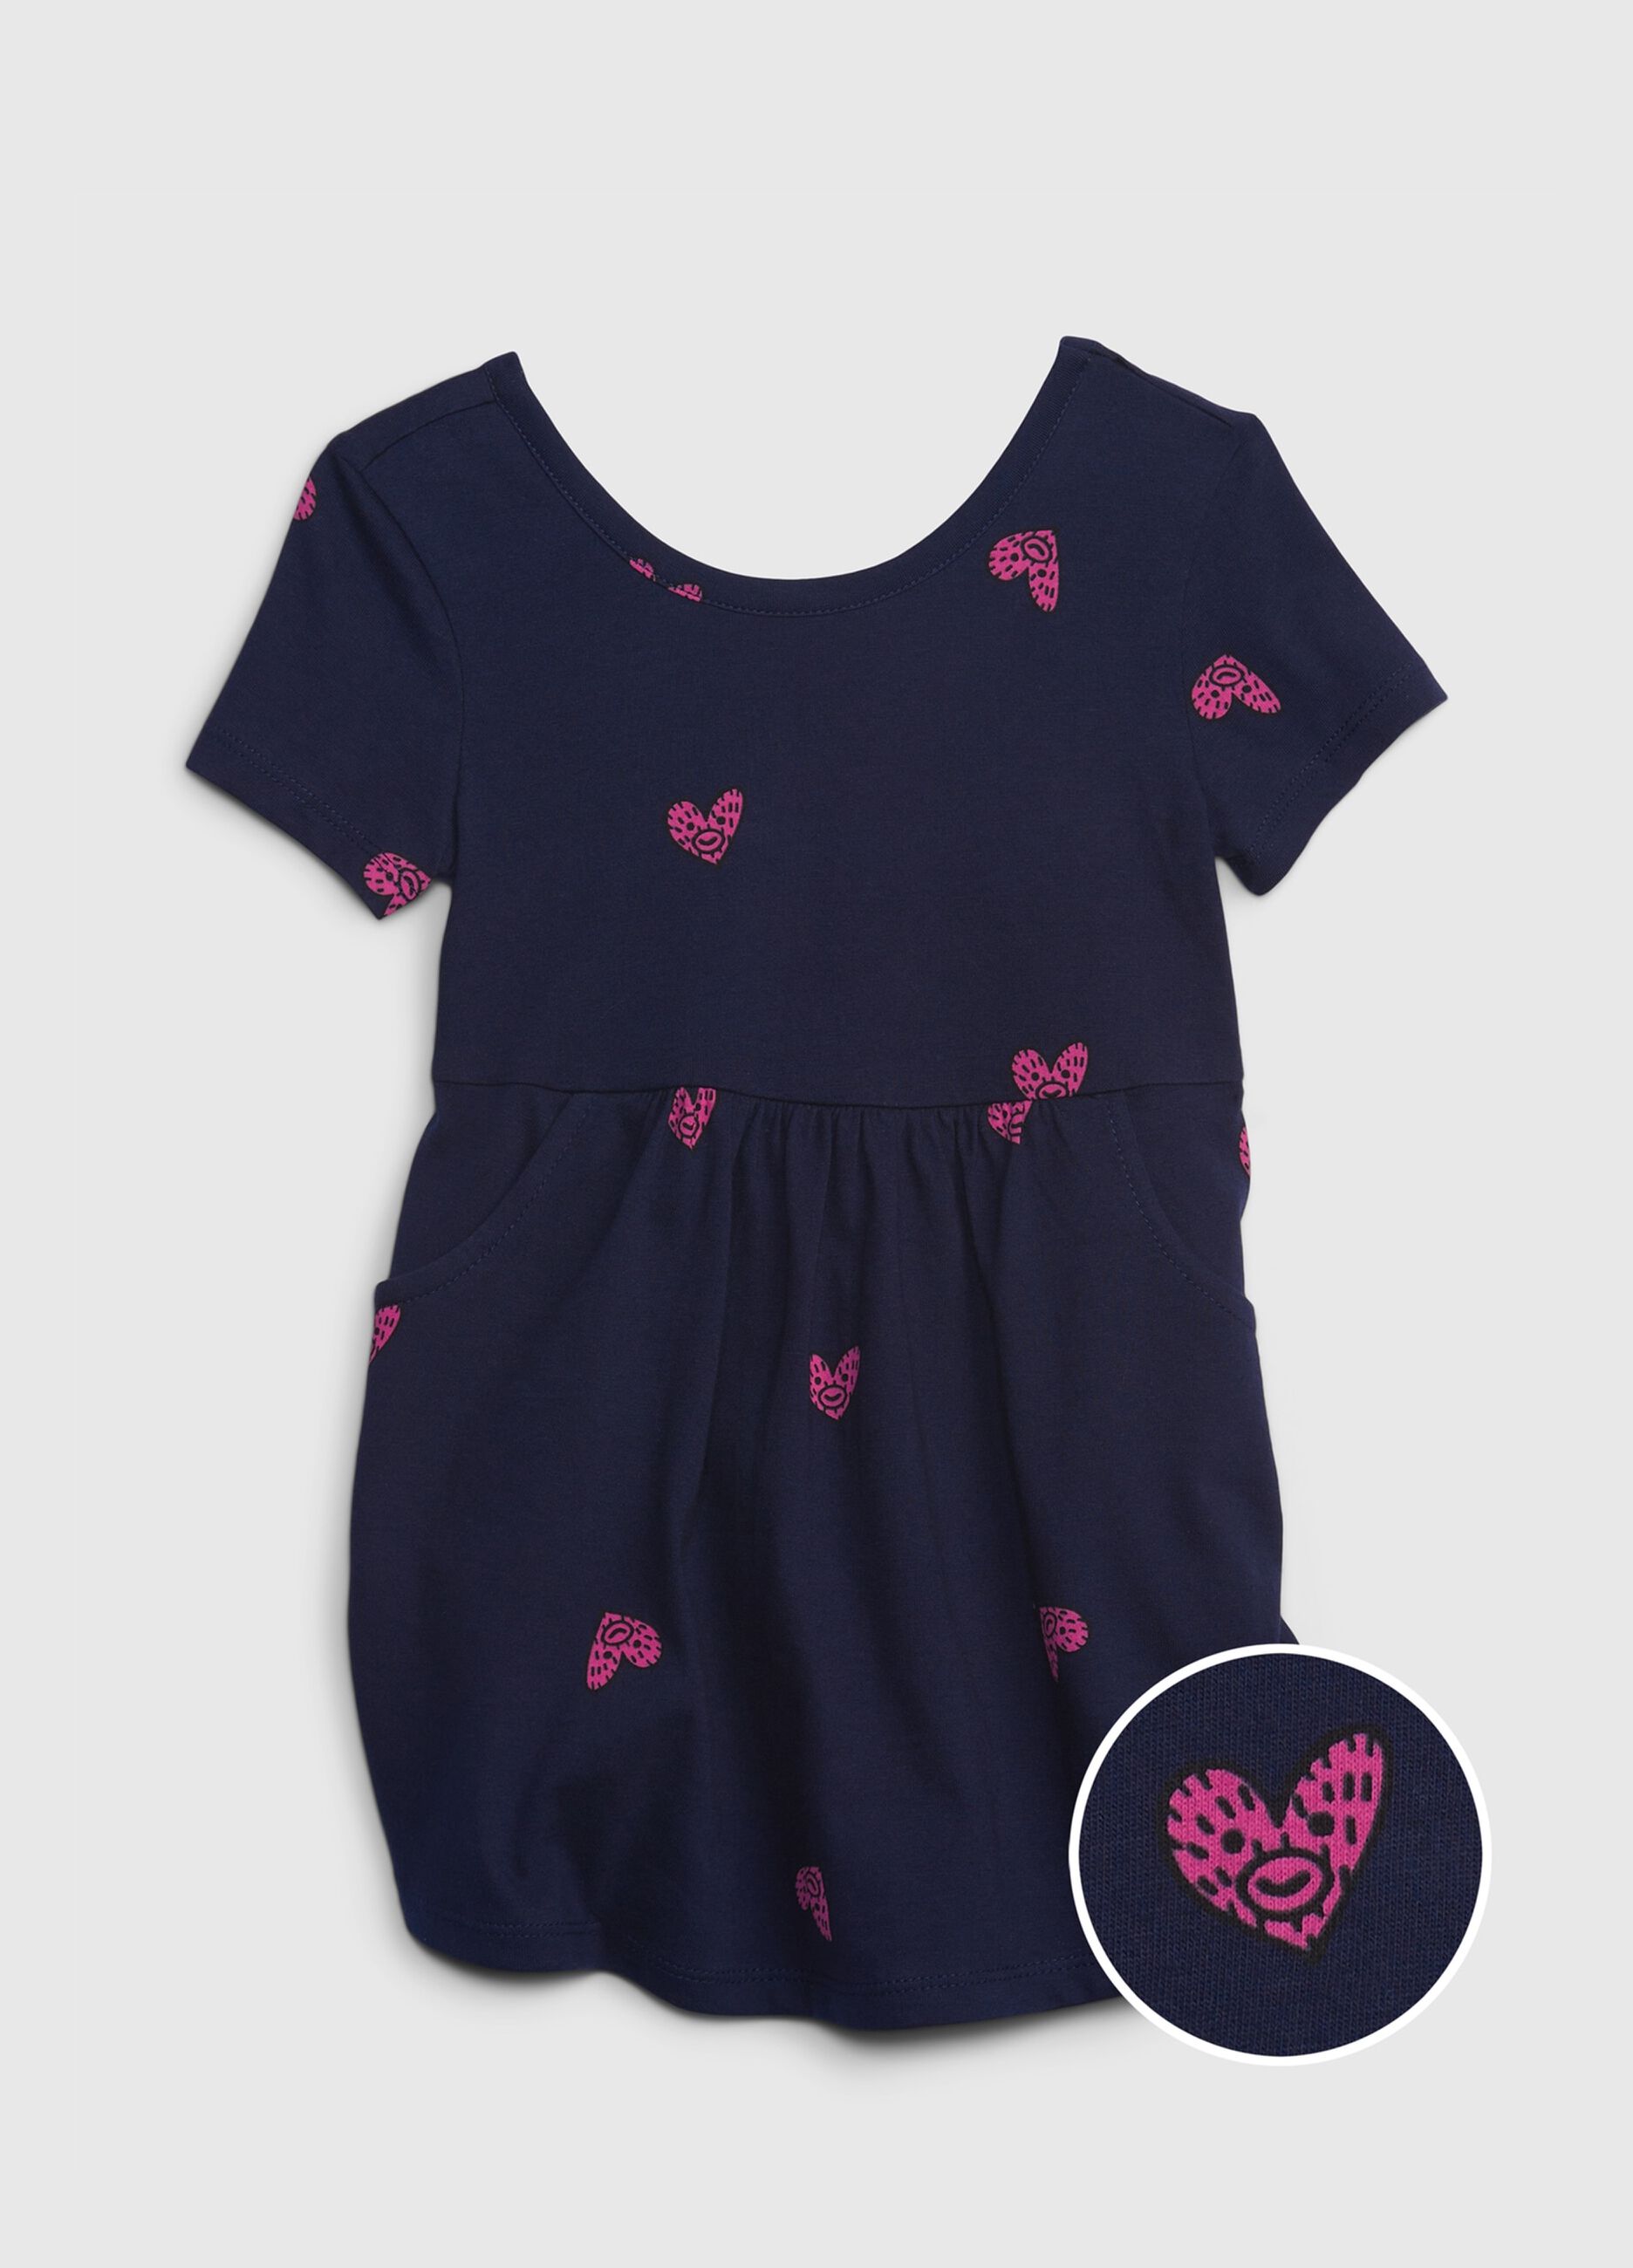 Short dress with heart print.